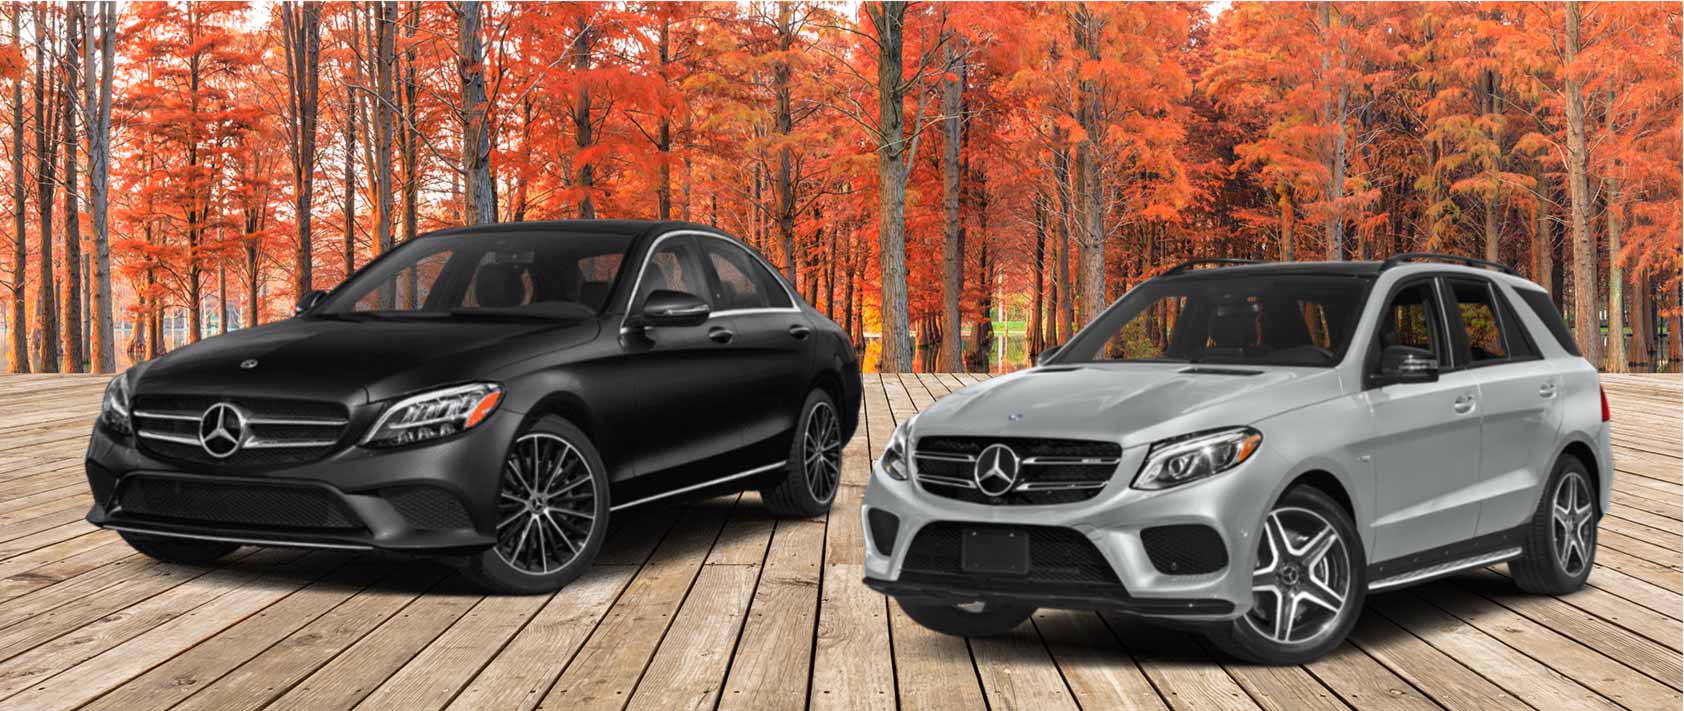 A black Mercedes-Benz car model and a silver Mercedes-Benz SUV model in a fall scene